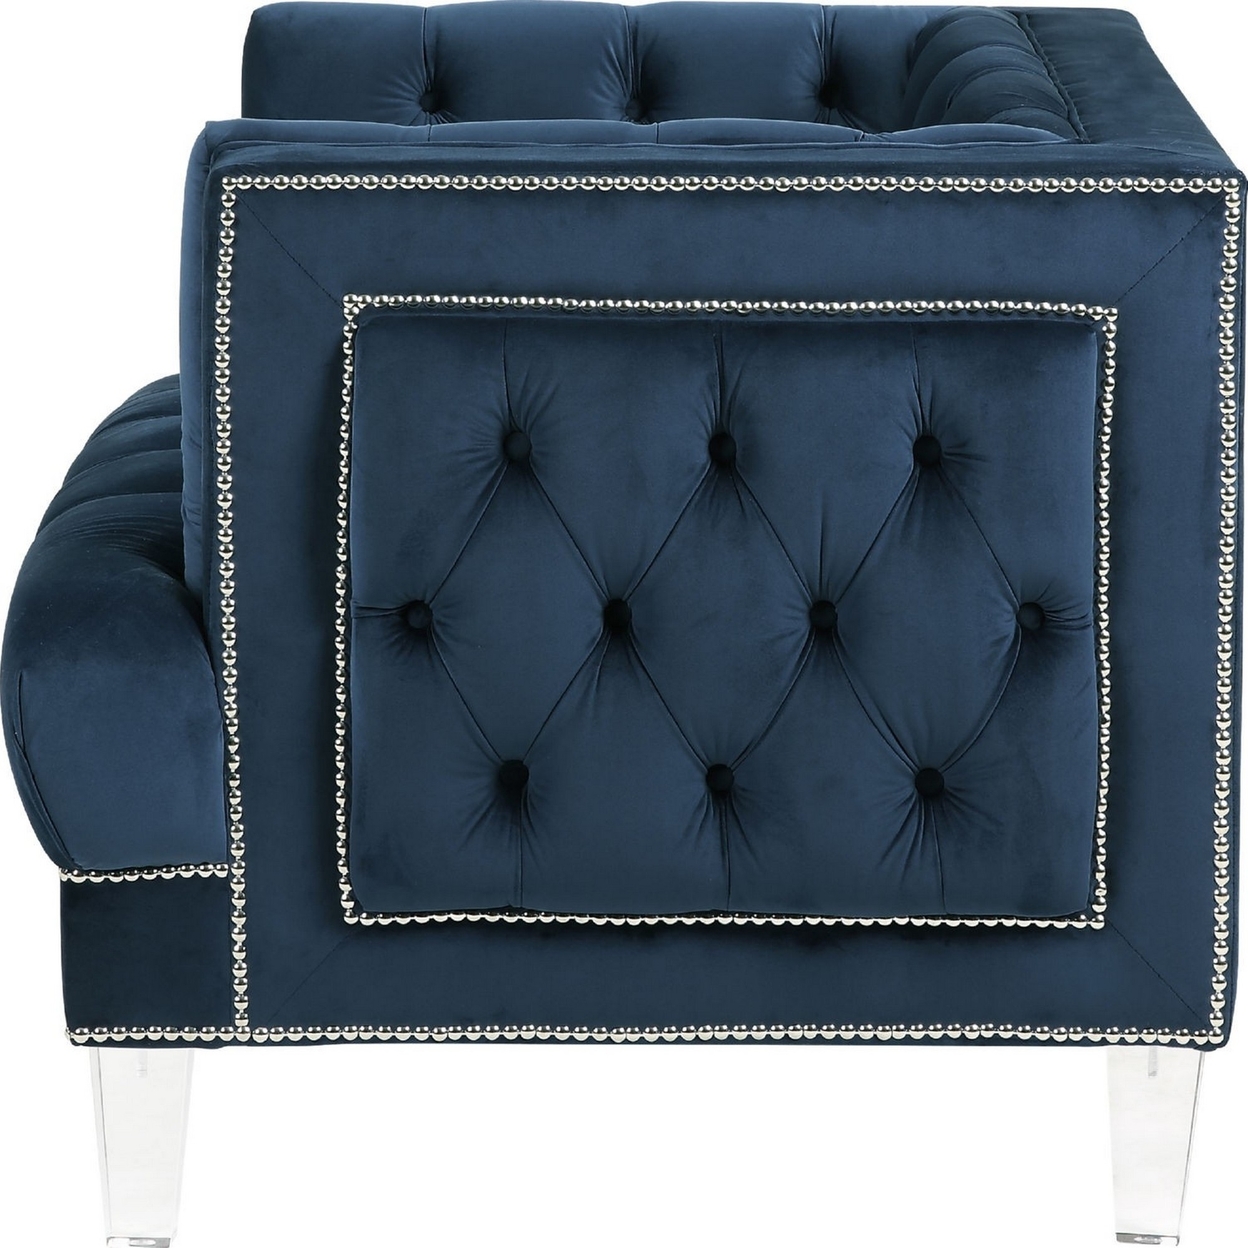 Velvet Upholstered Chair With Tufted Details And Acrylic Legs, Blue- Saltoro Sherpi